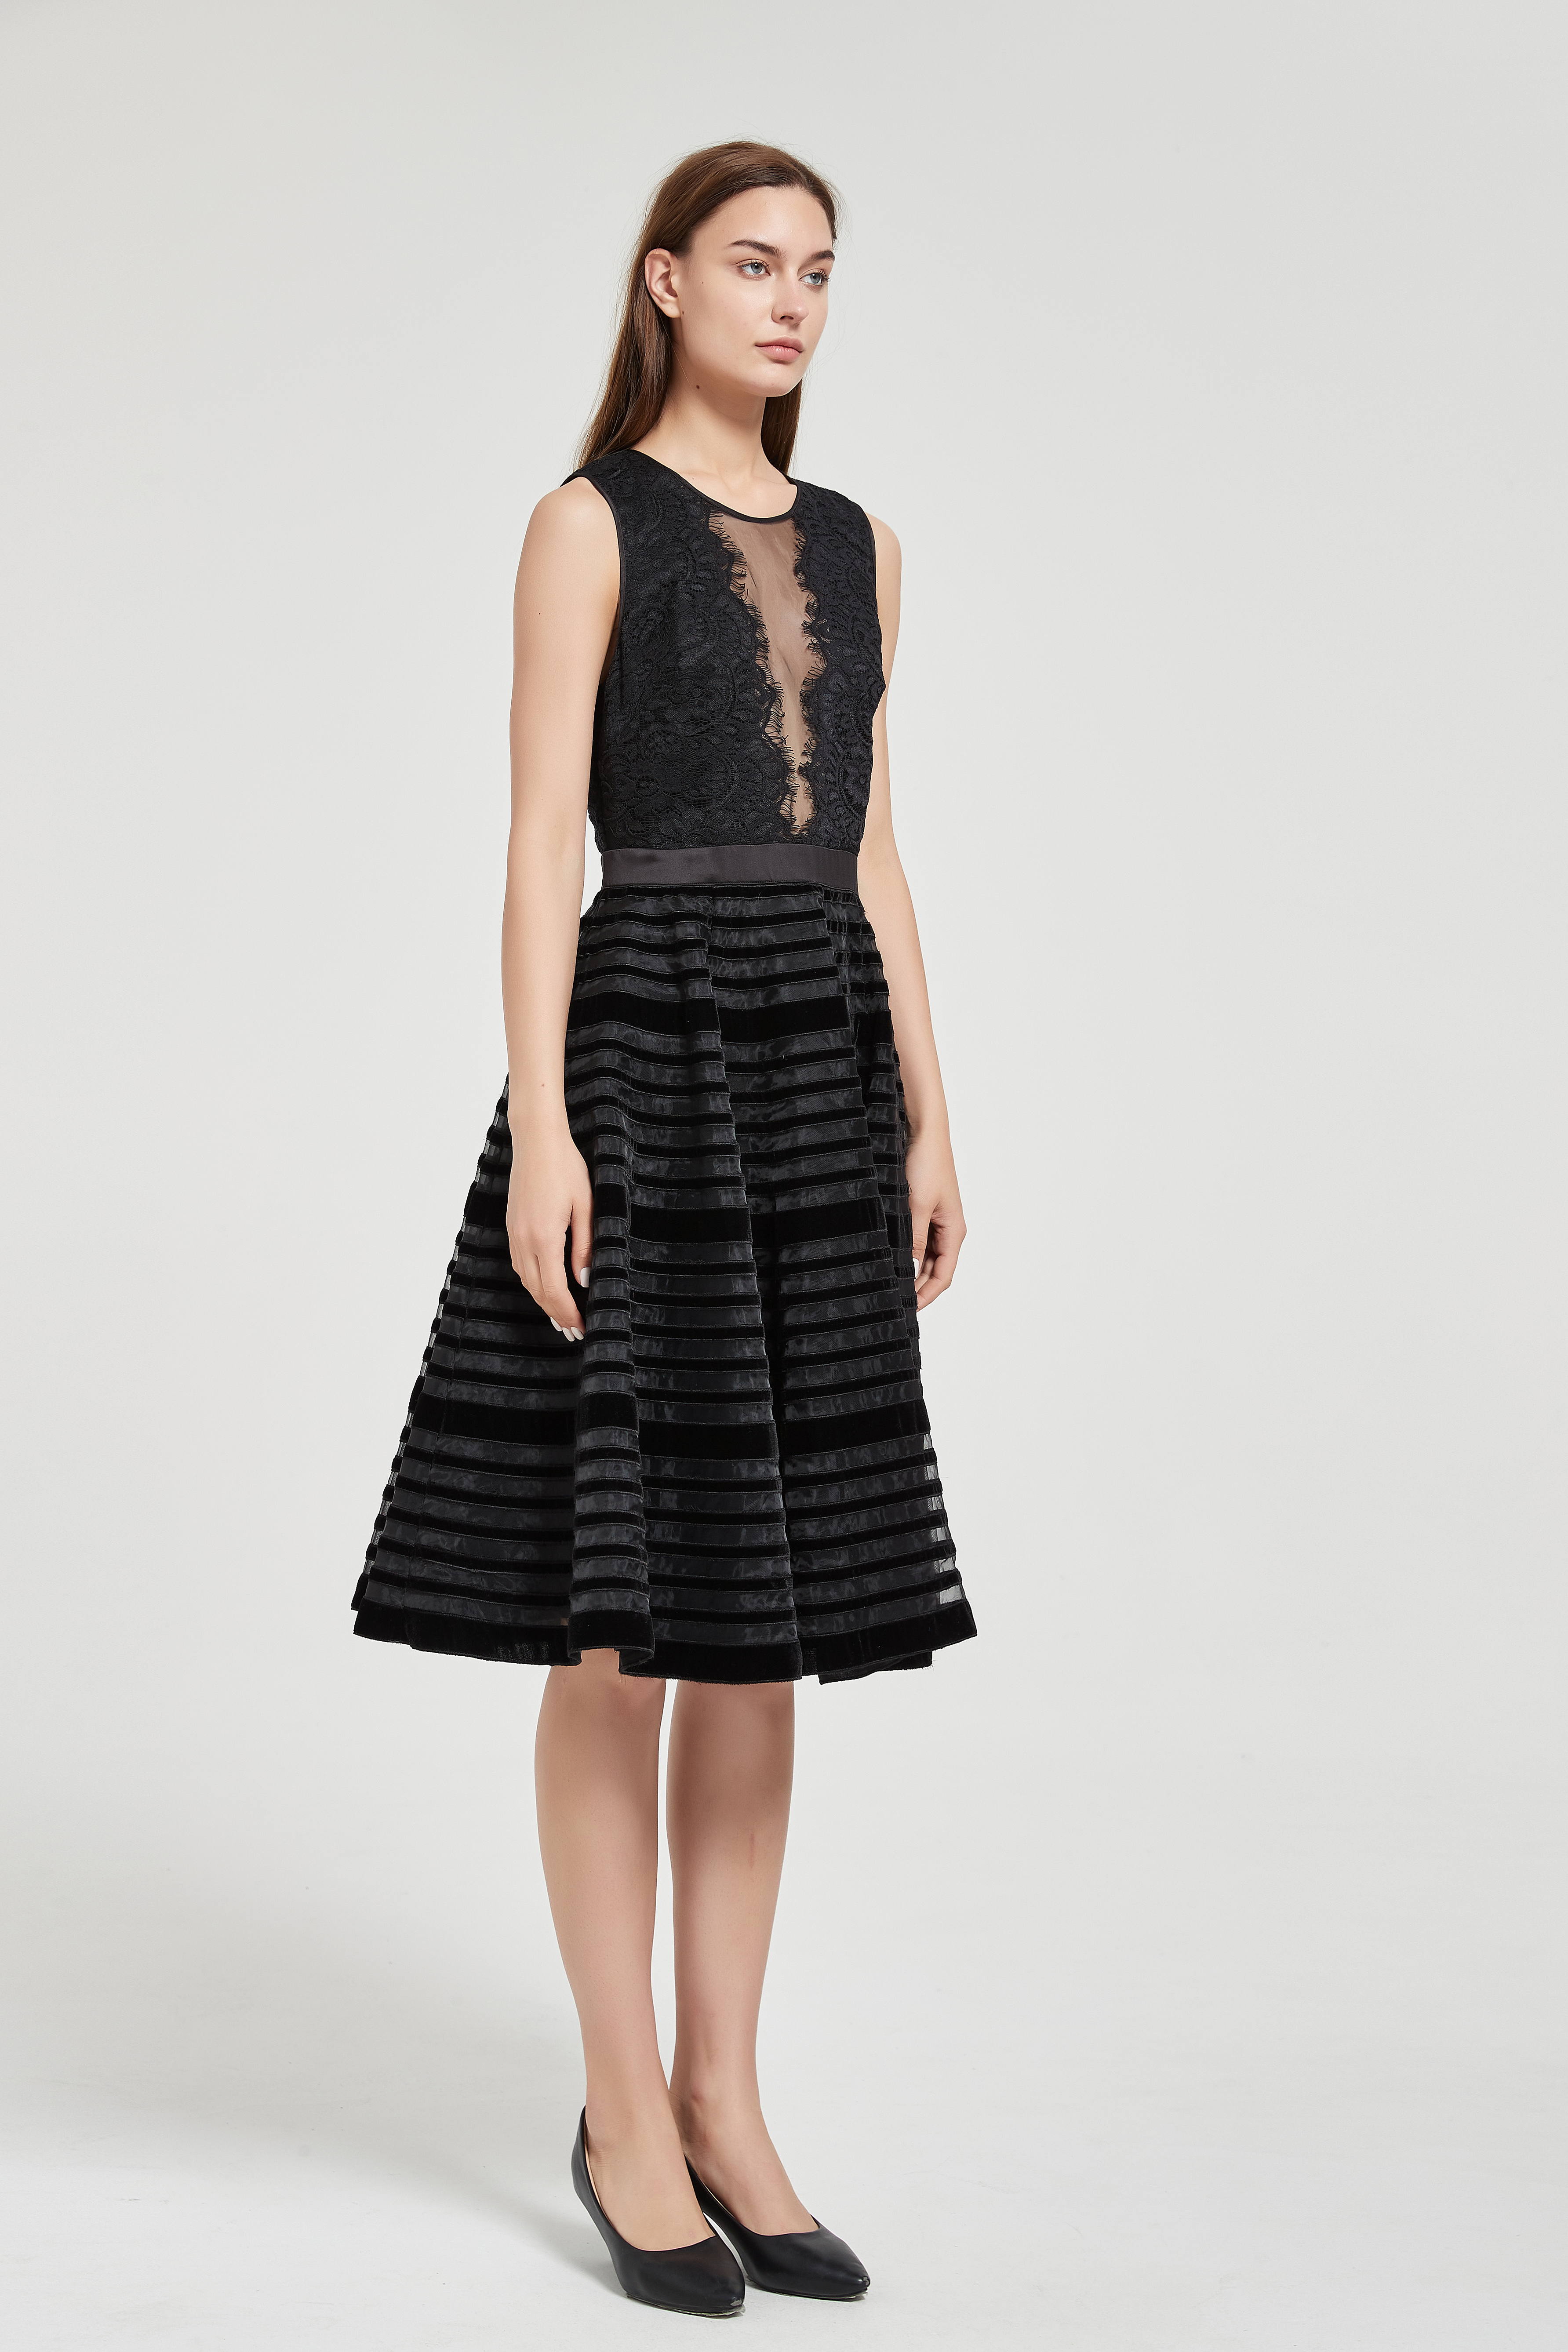 Women's Black Lace Sleeveless Dress